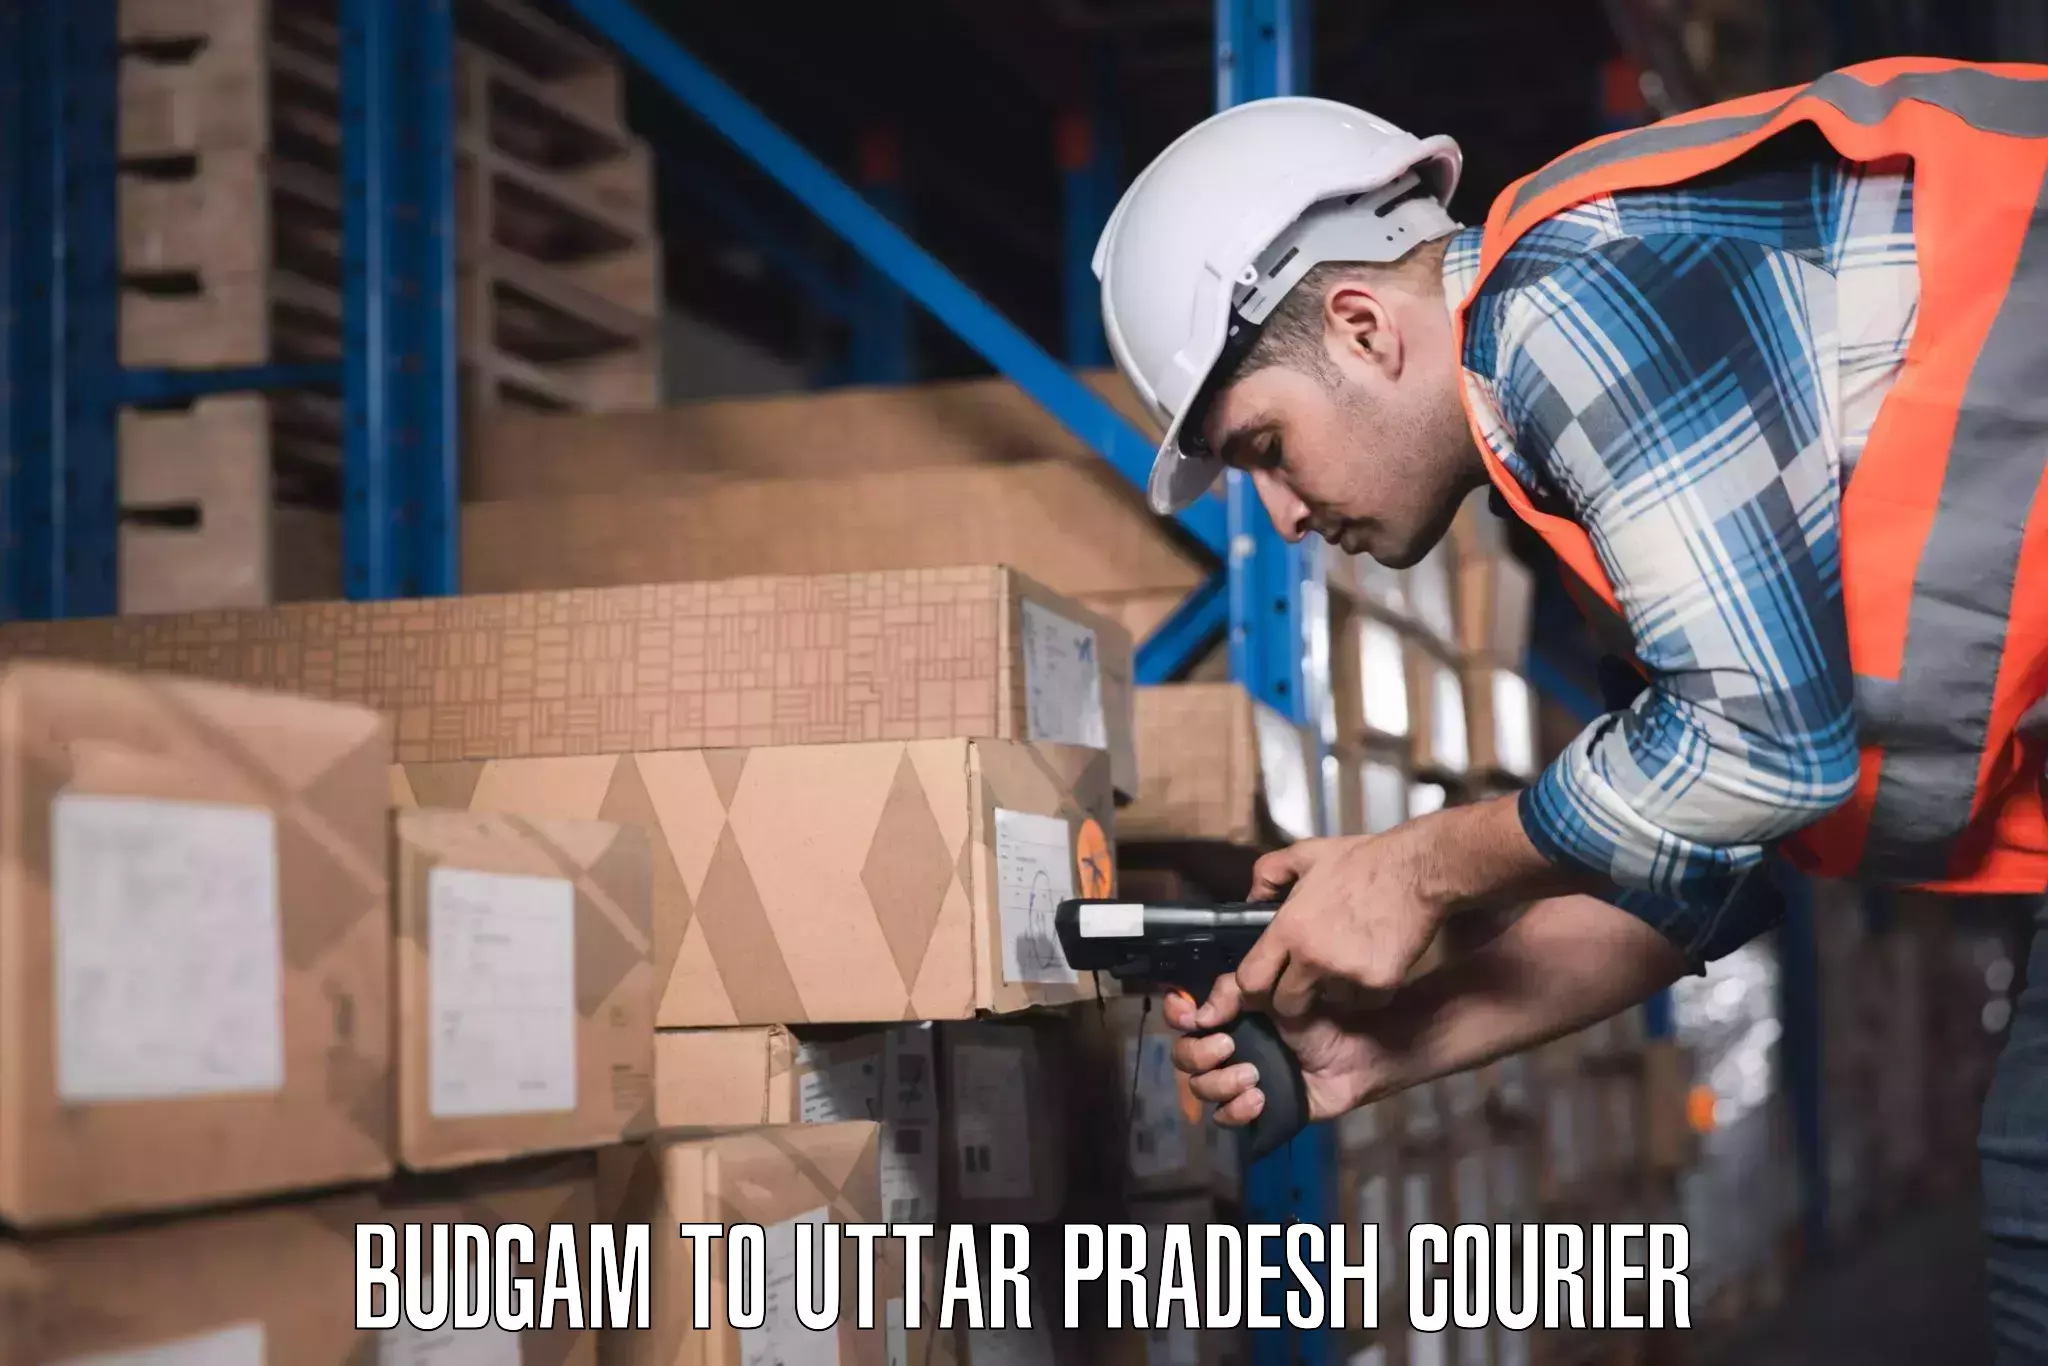 Luggage delivery network Budgam to Muzaffarnagar